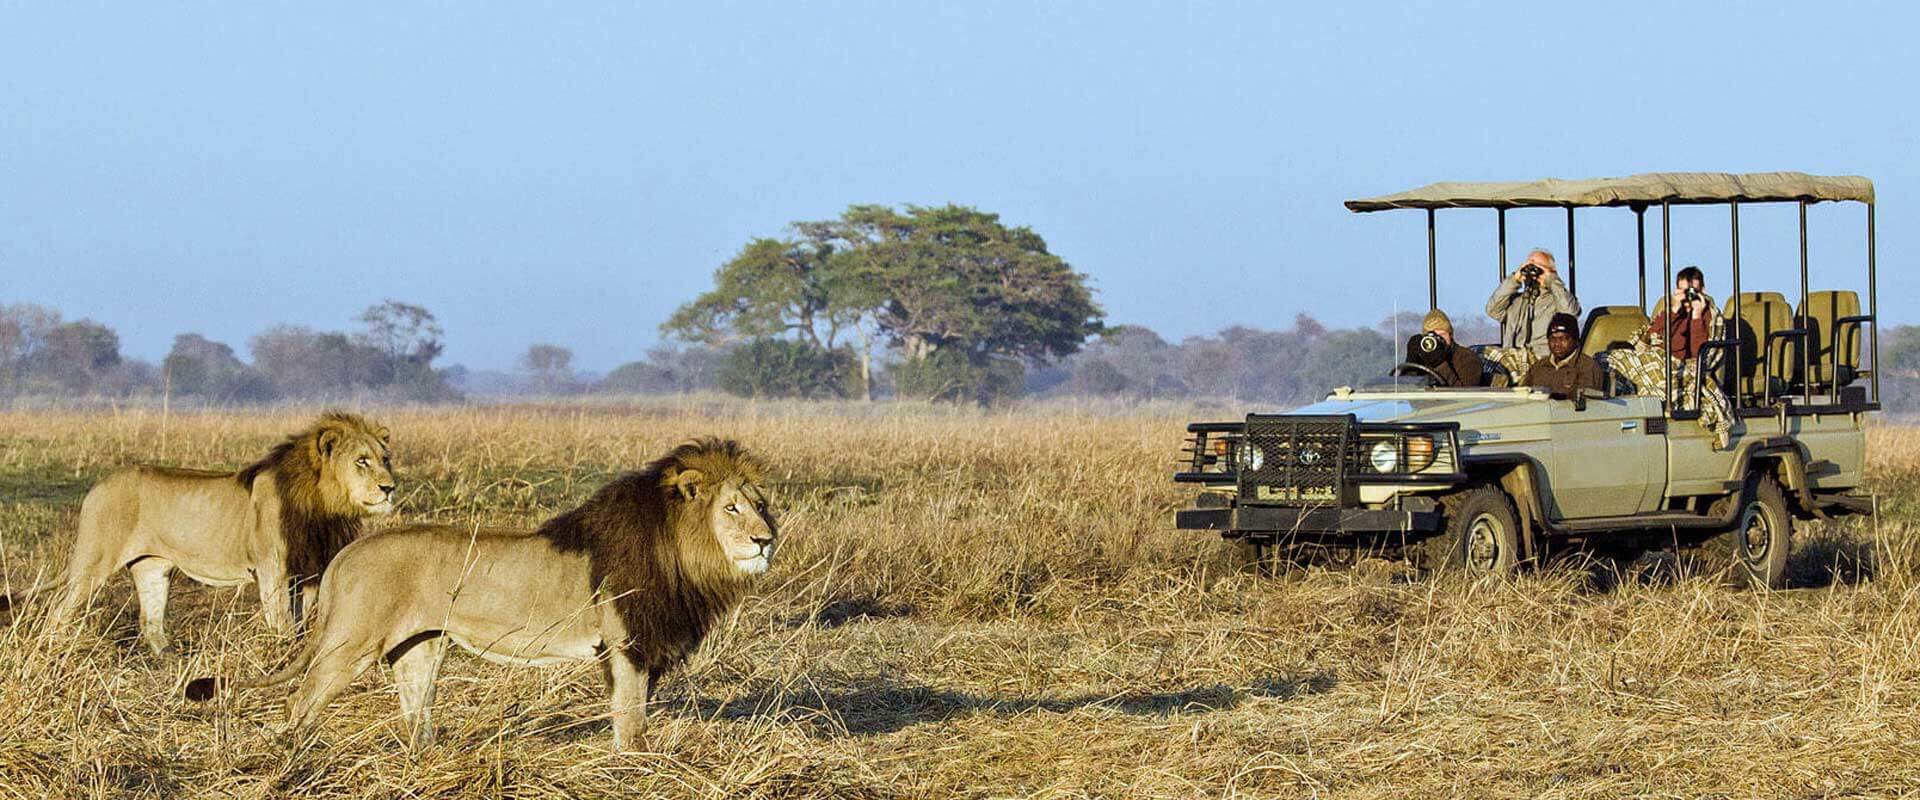 wilderness safaris game drive on an african safari holiday